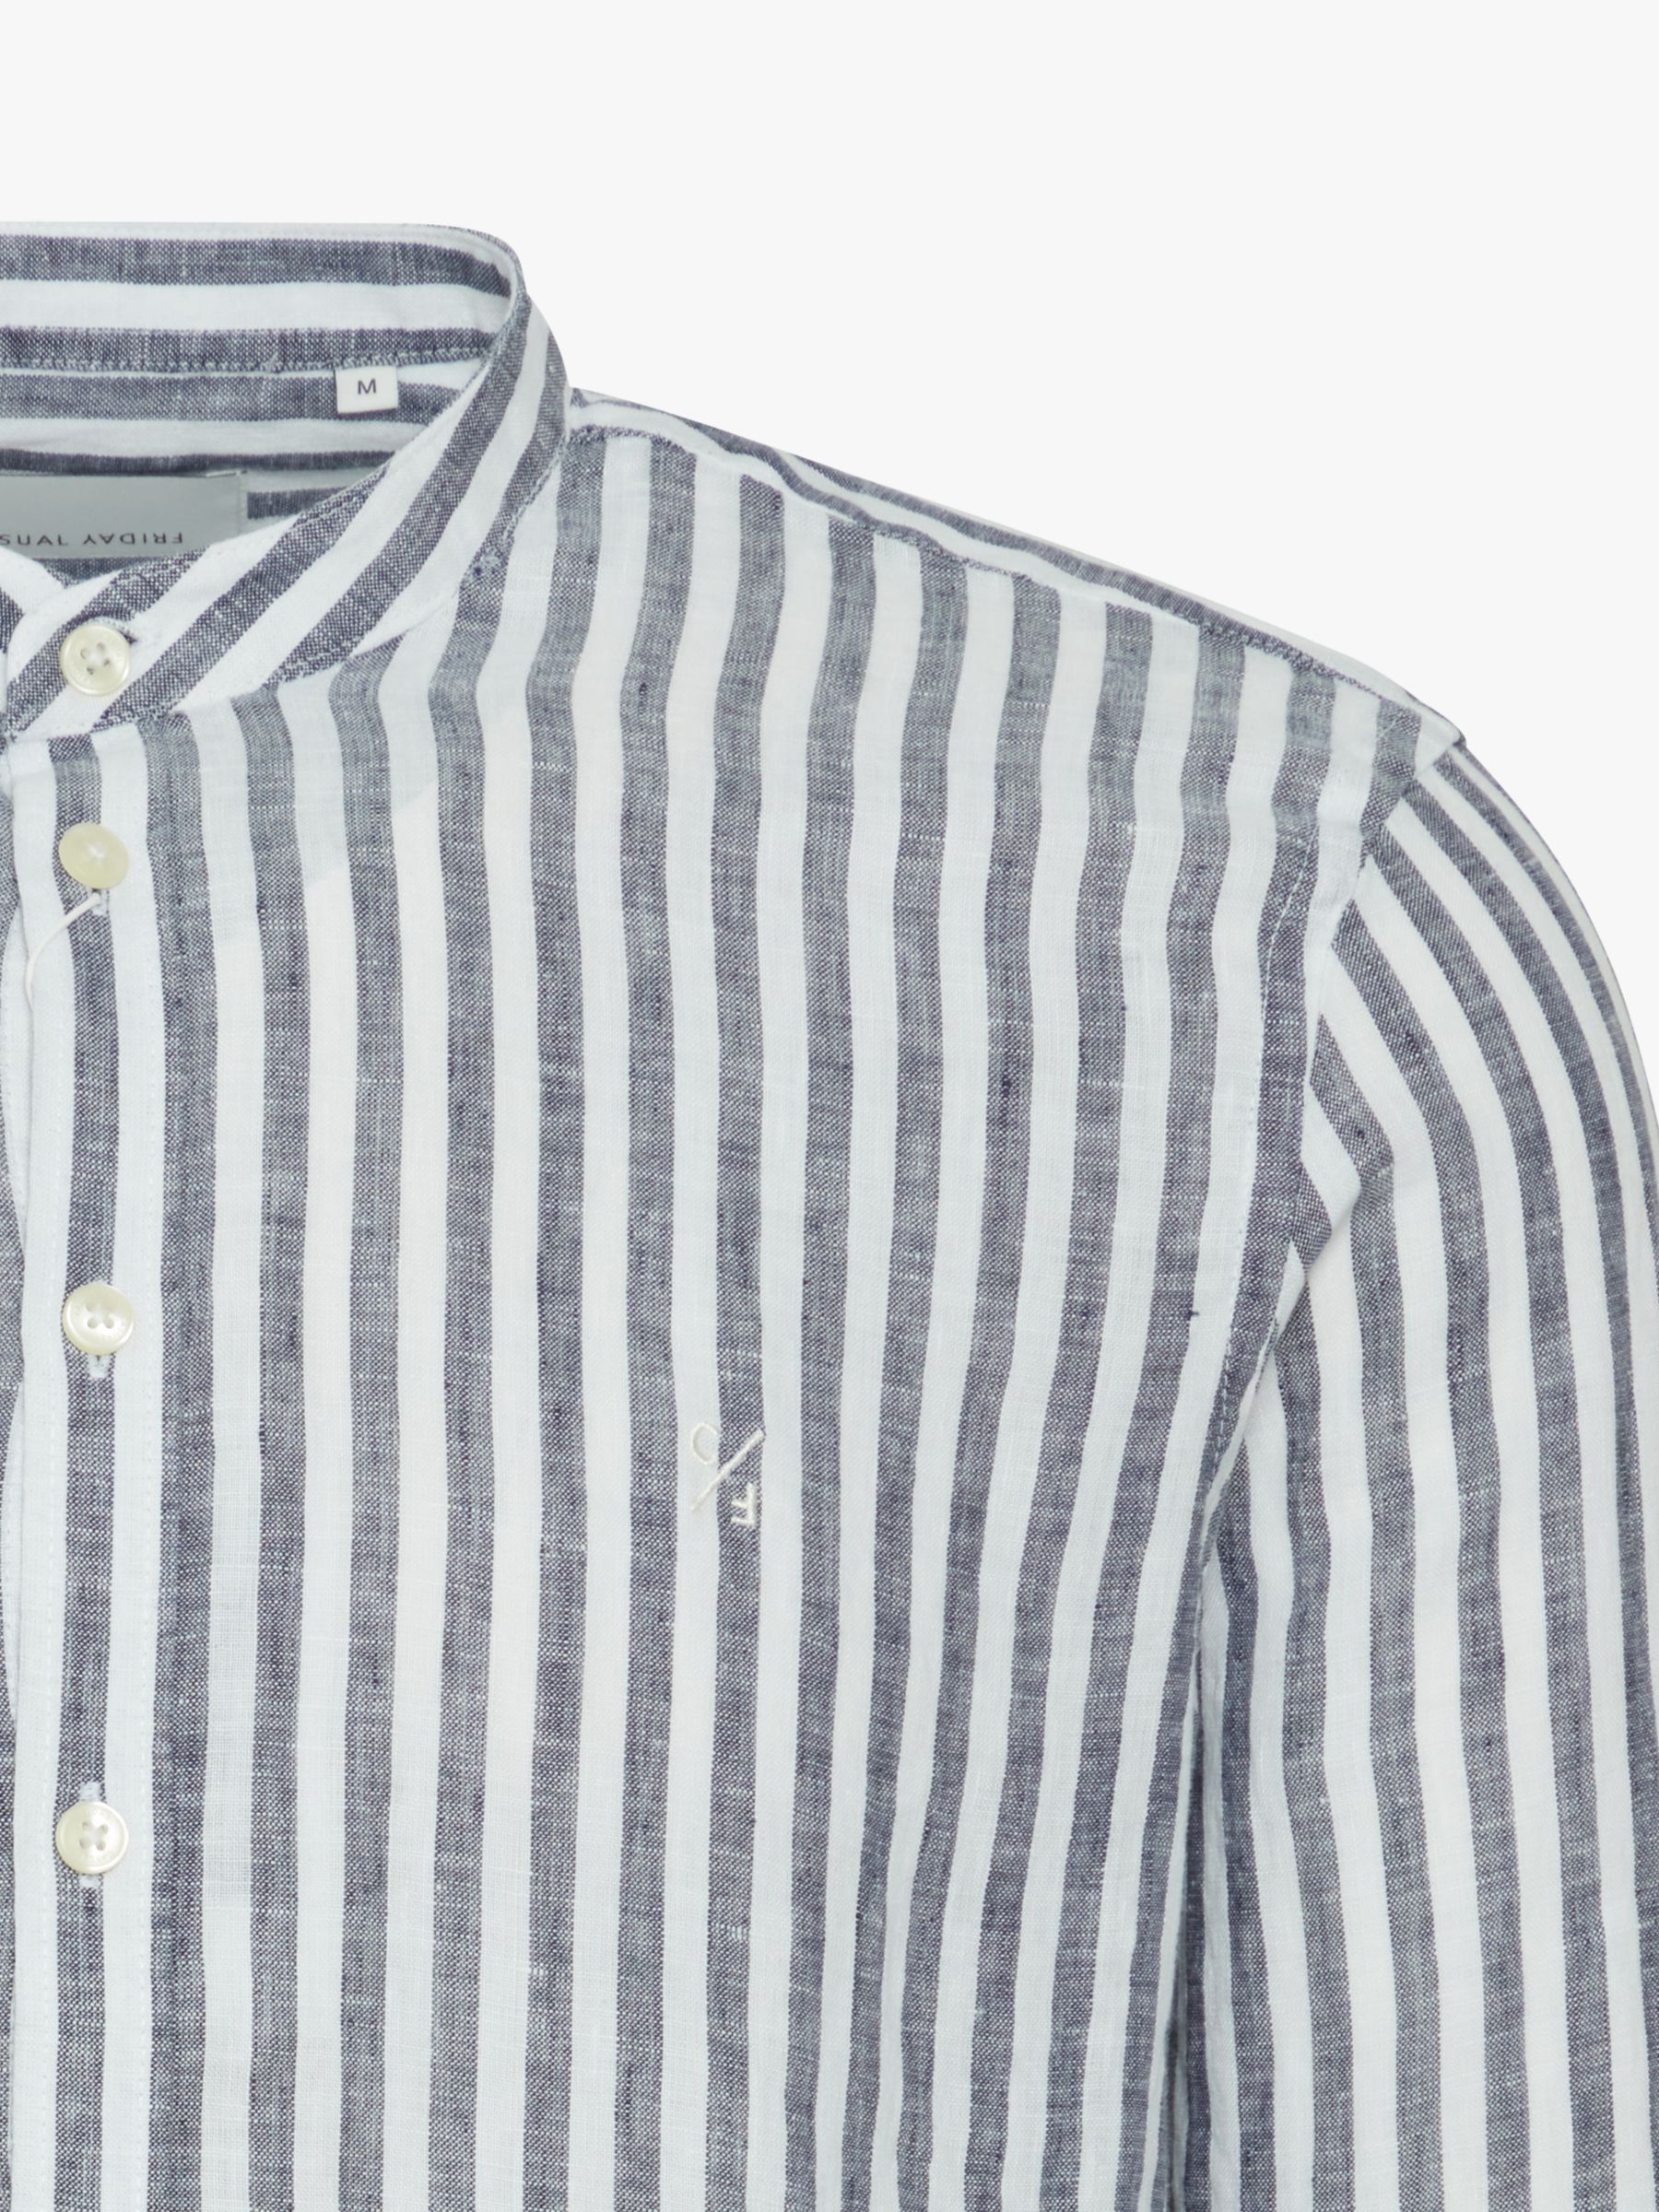 Casual Friday Anton Long Sleeve Striped Grandad Shirt, Navy/White, S